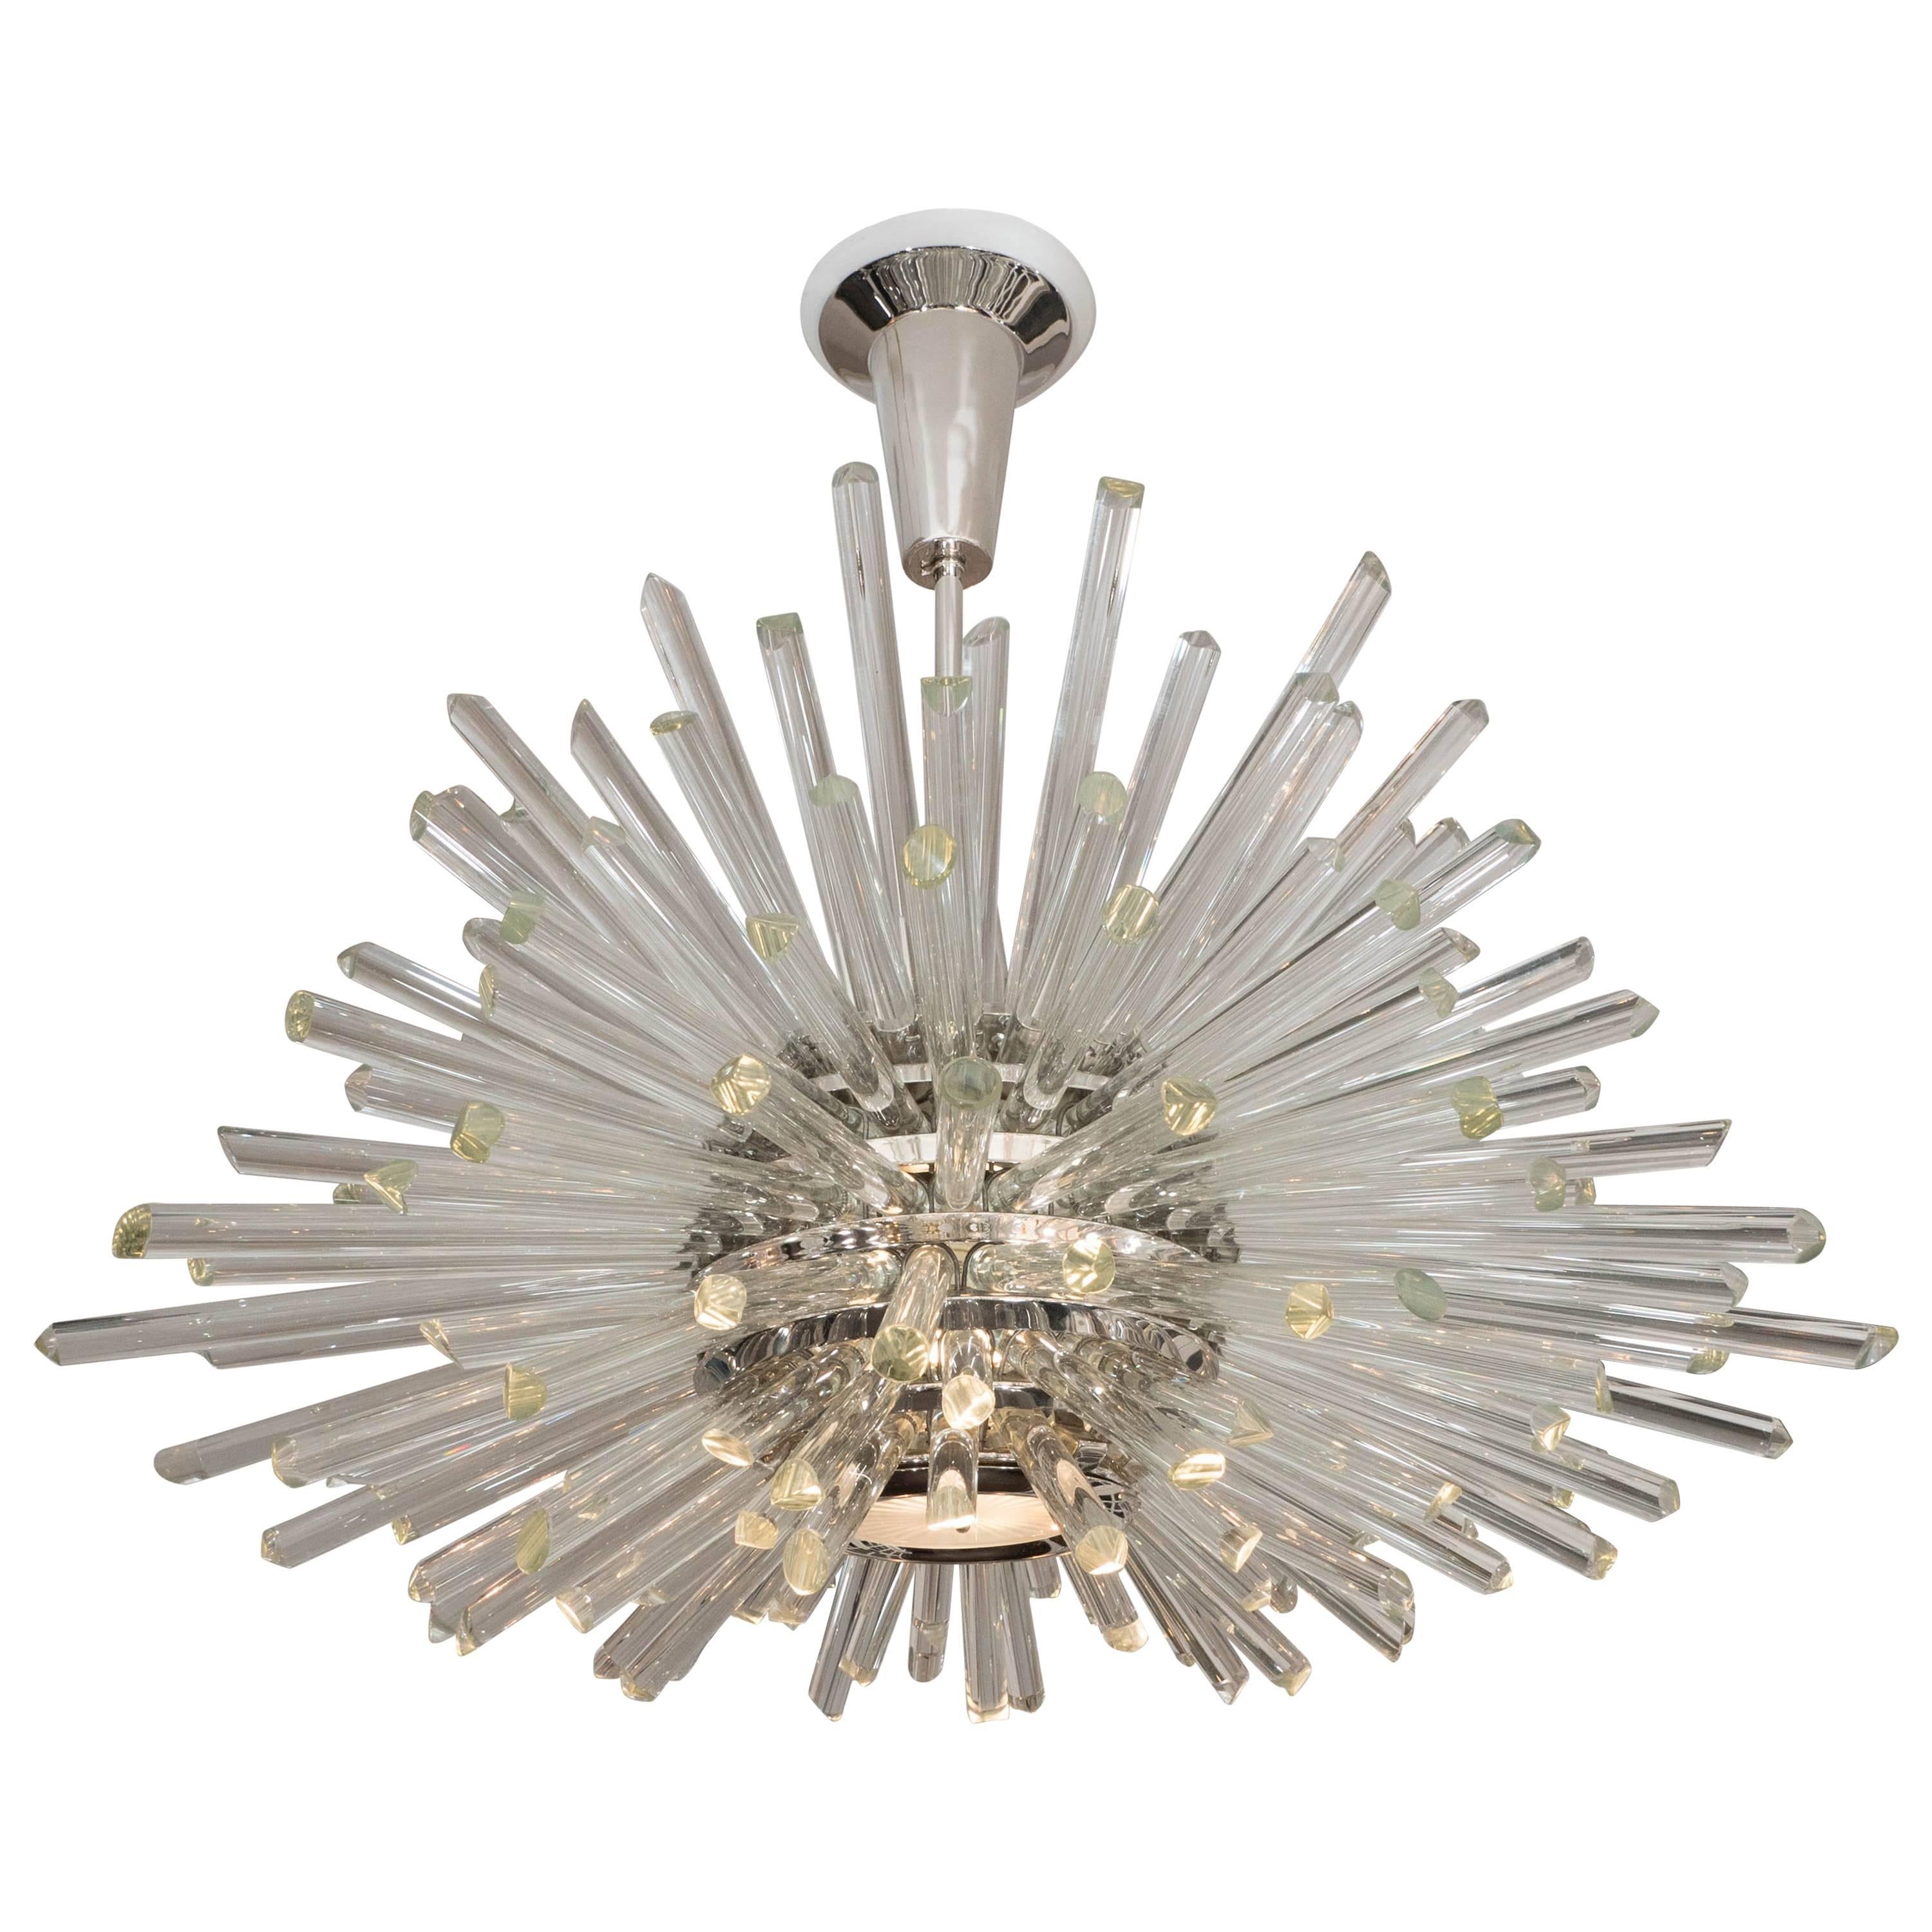 Ovaler Sputnik-Kronleuchter mit beleuchtetem Glasstab aus poliertem Nickel nach Maß